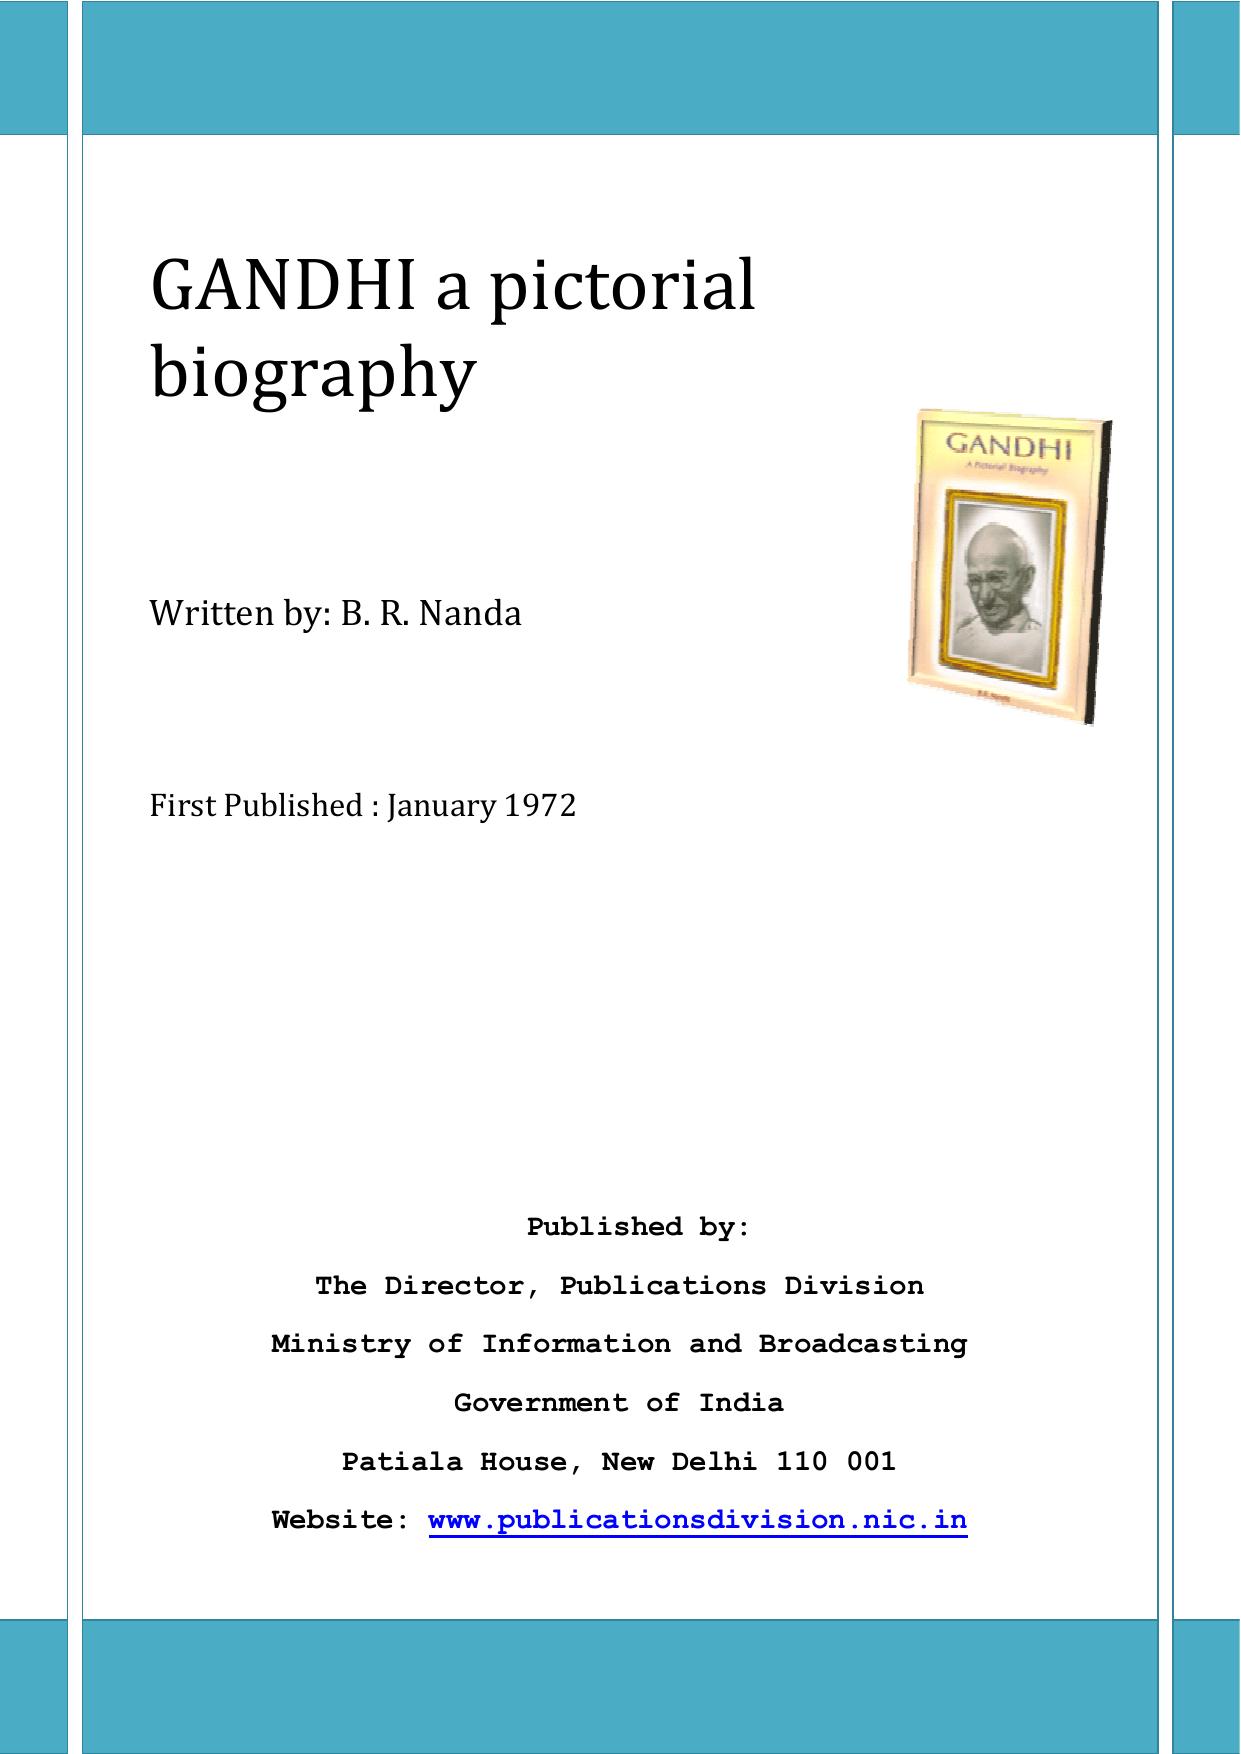 Gandhi Pictorial biography